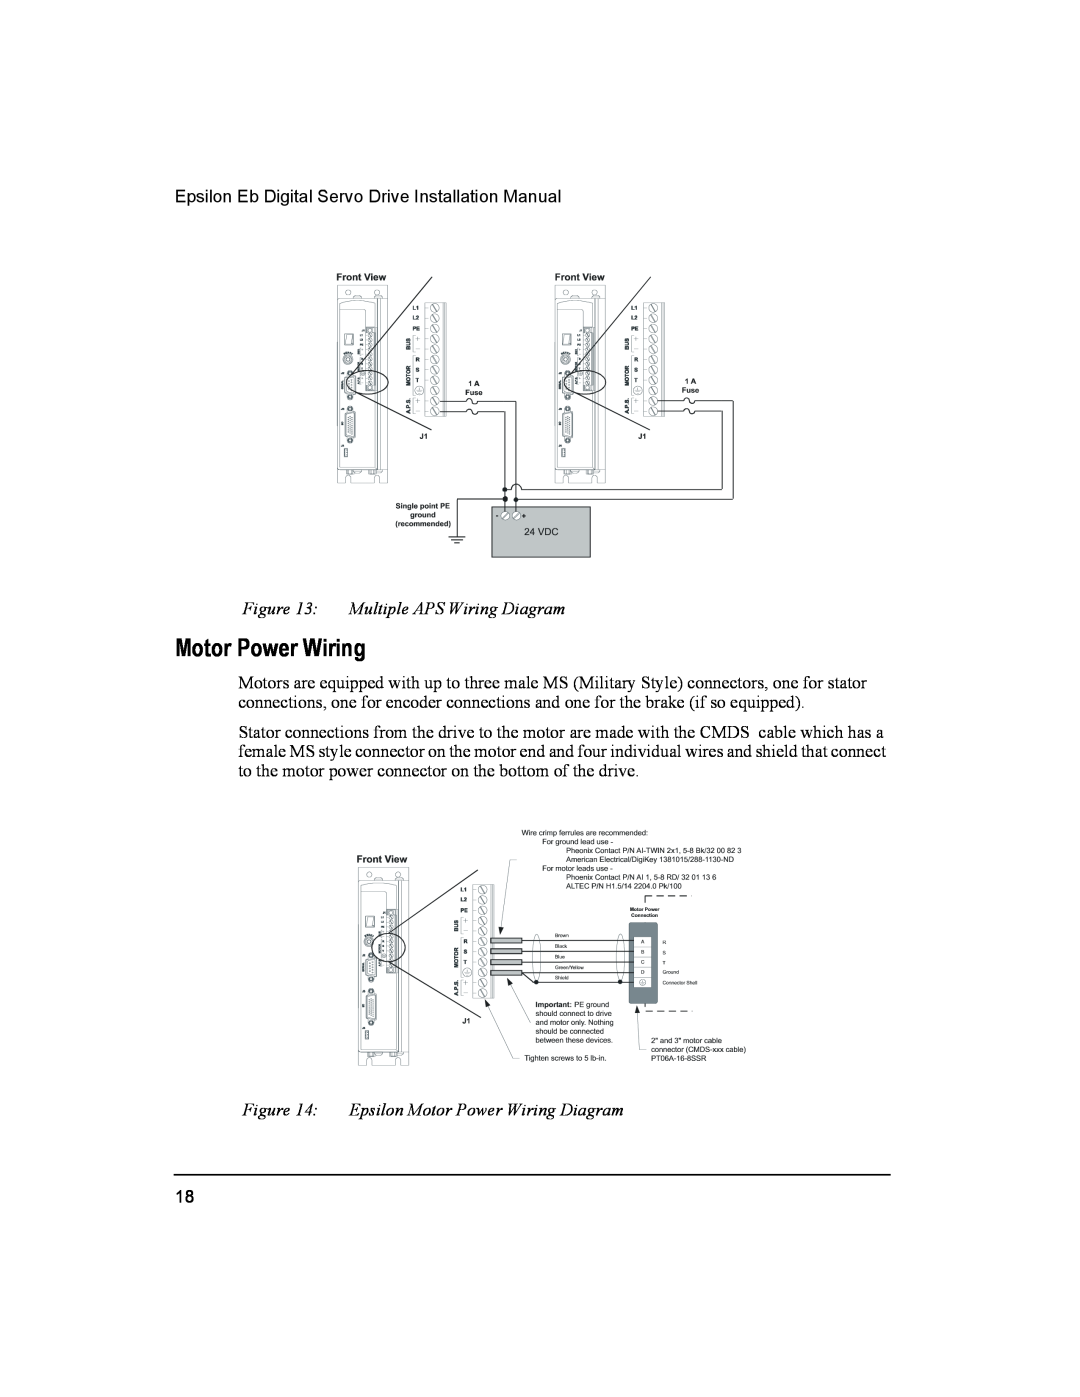 Emerson 400501-05, Epsilon Eb Digital Servo Drive Multiple APS Wiring Diagram, Epsilon Motor Power Wiring Diagram 